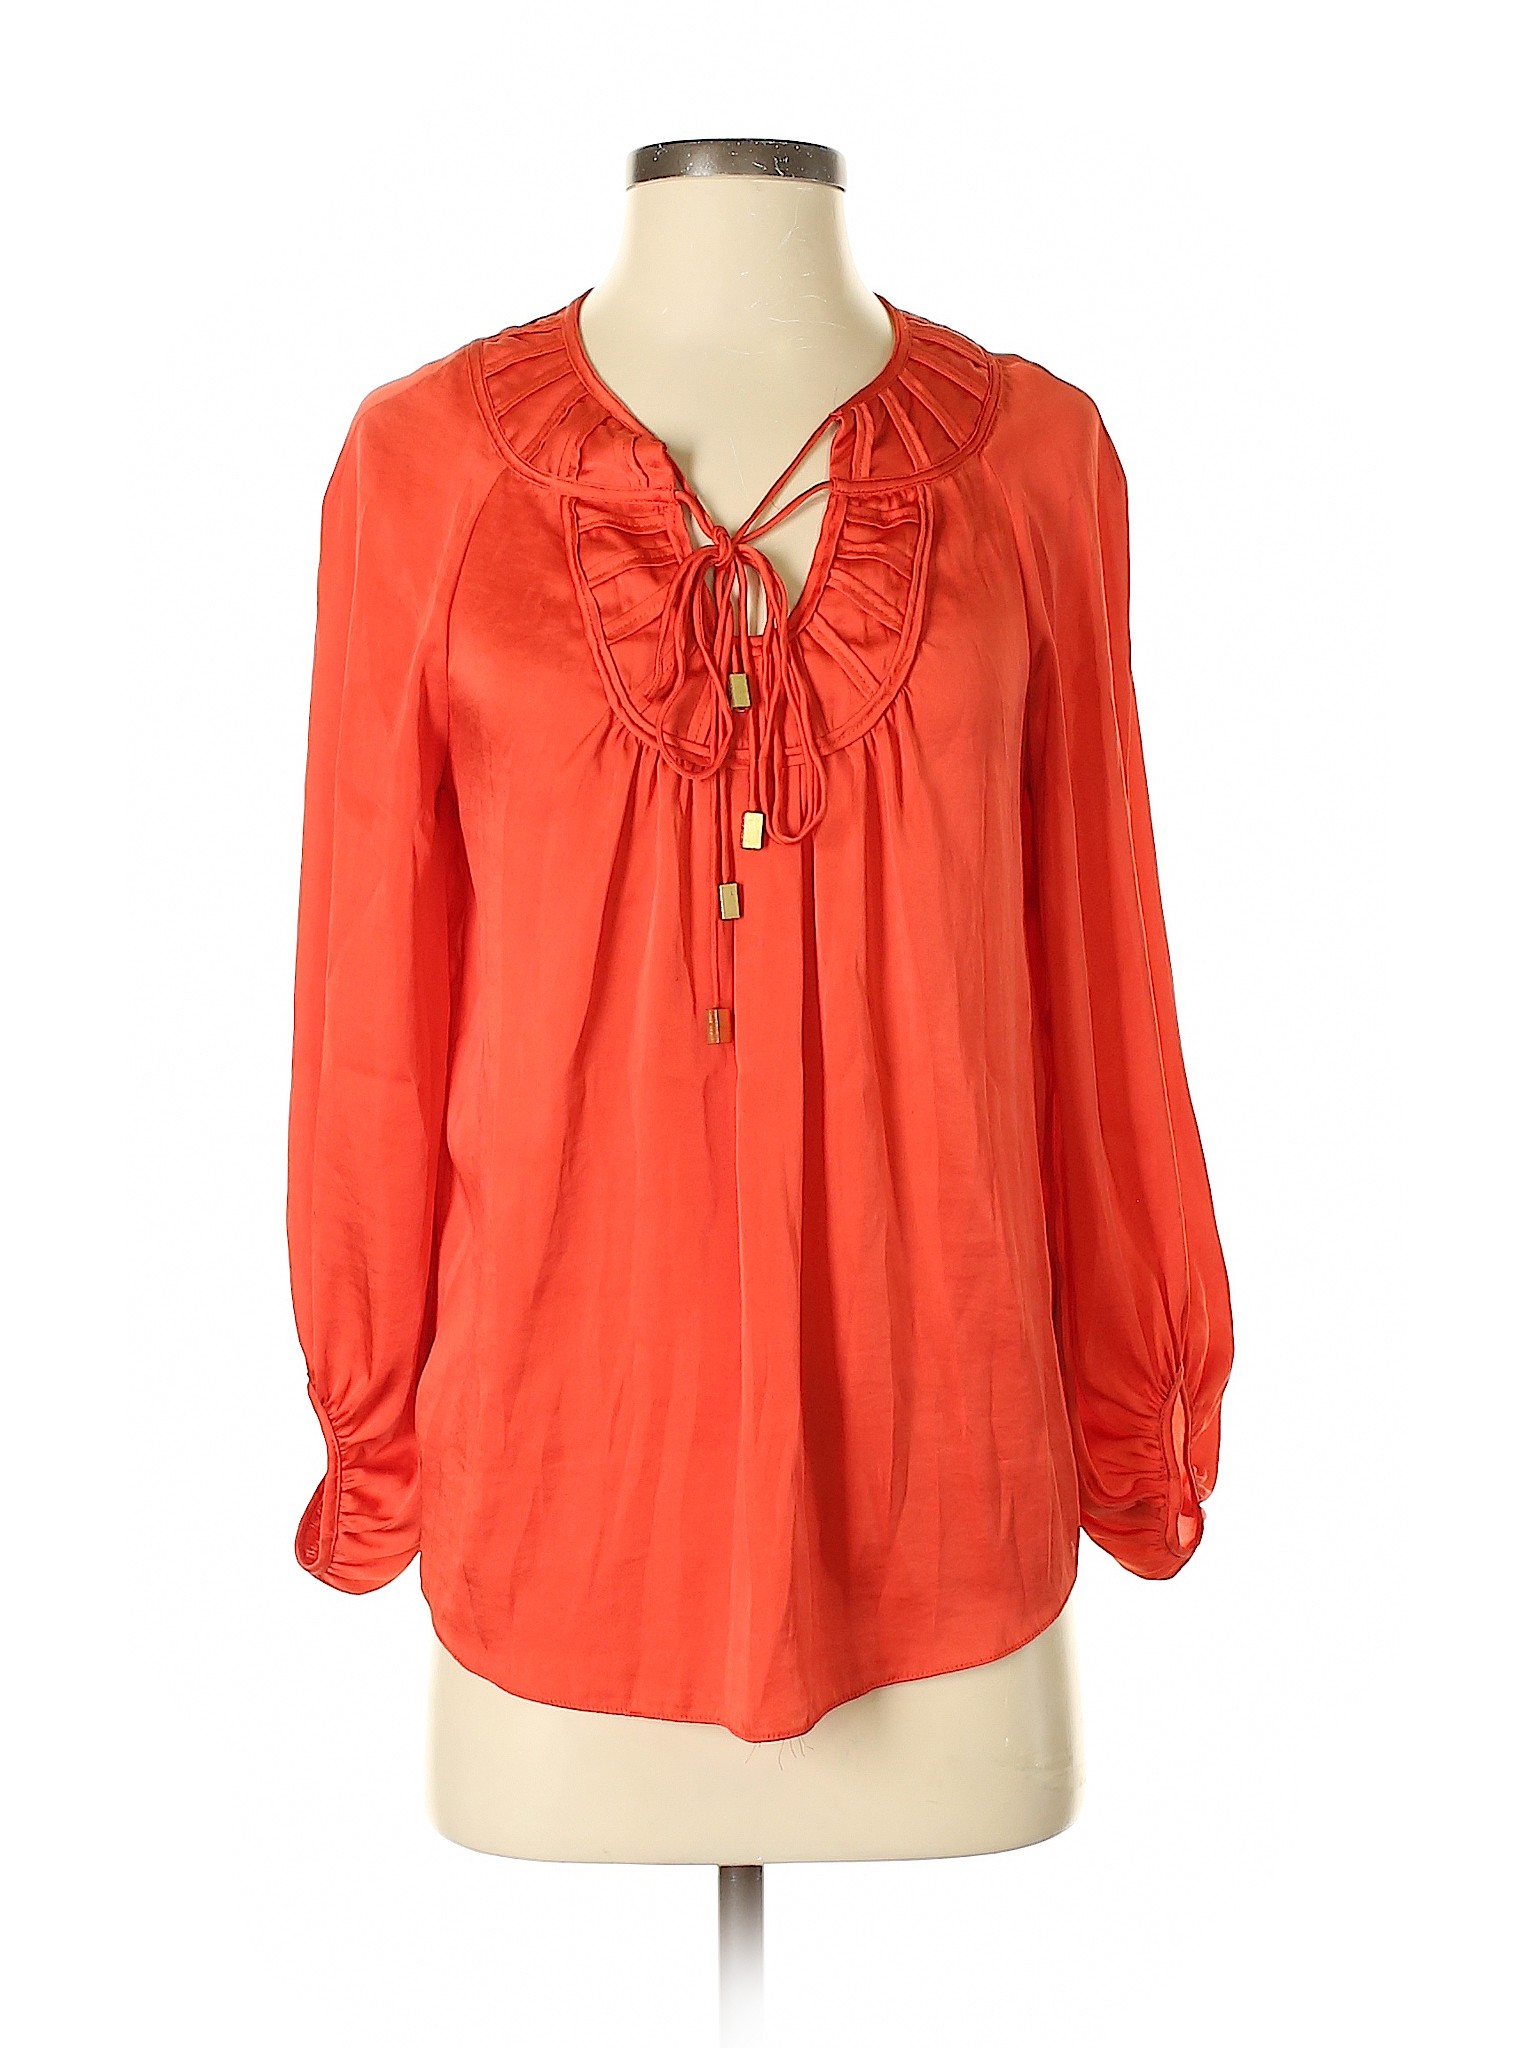 Vince Camuto Women Orange Long Sleeve Blouse XS | eBay